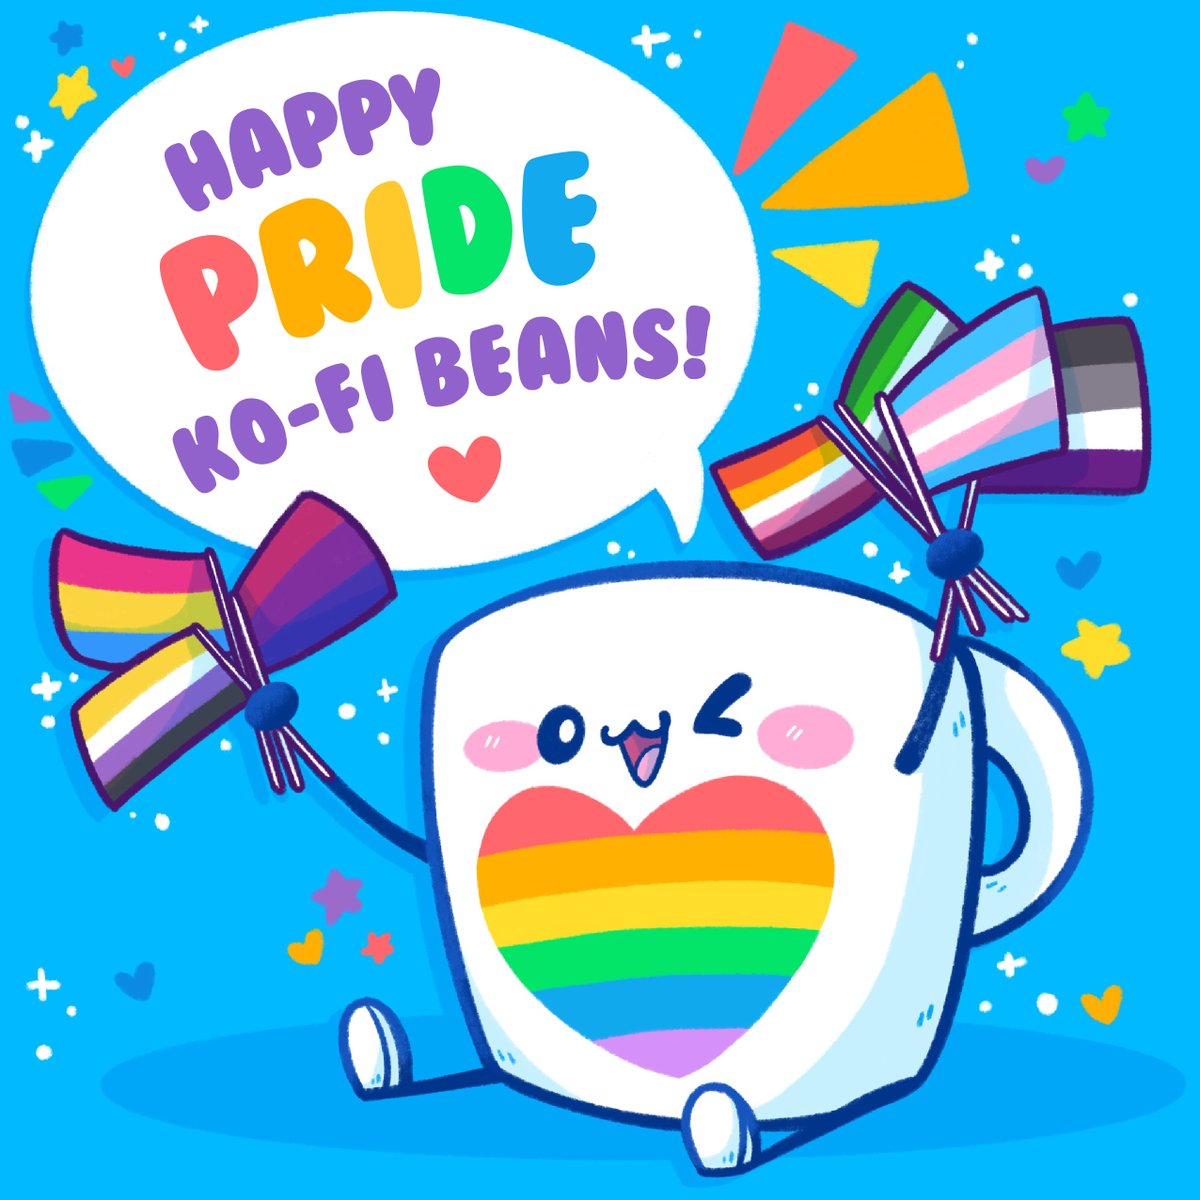 🏳️‍🌈 Pride Support Thread 🏳️‍🌈

❤️ Share your Ko-fi page below
✨ Tag your fav LGBTQ+ creators
🔄 RT to spread the love!

#Pride #LGBTQ #SupportCreators